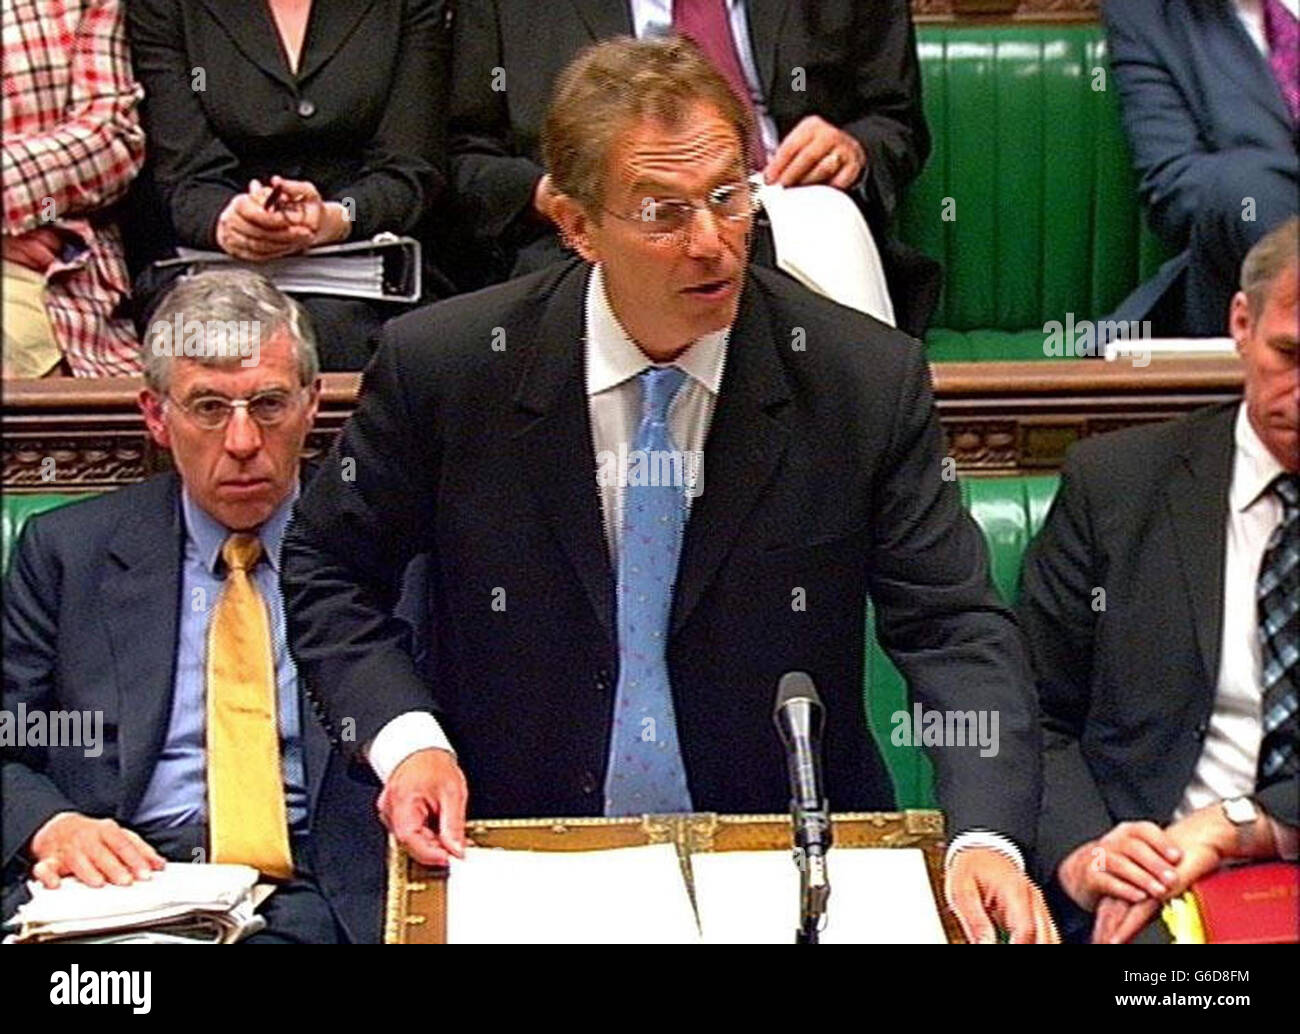 Tony Blair Europe debate Stock Photo